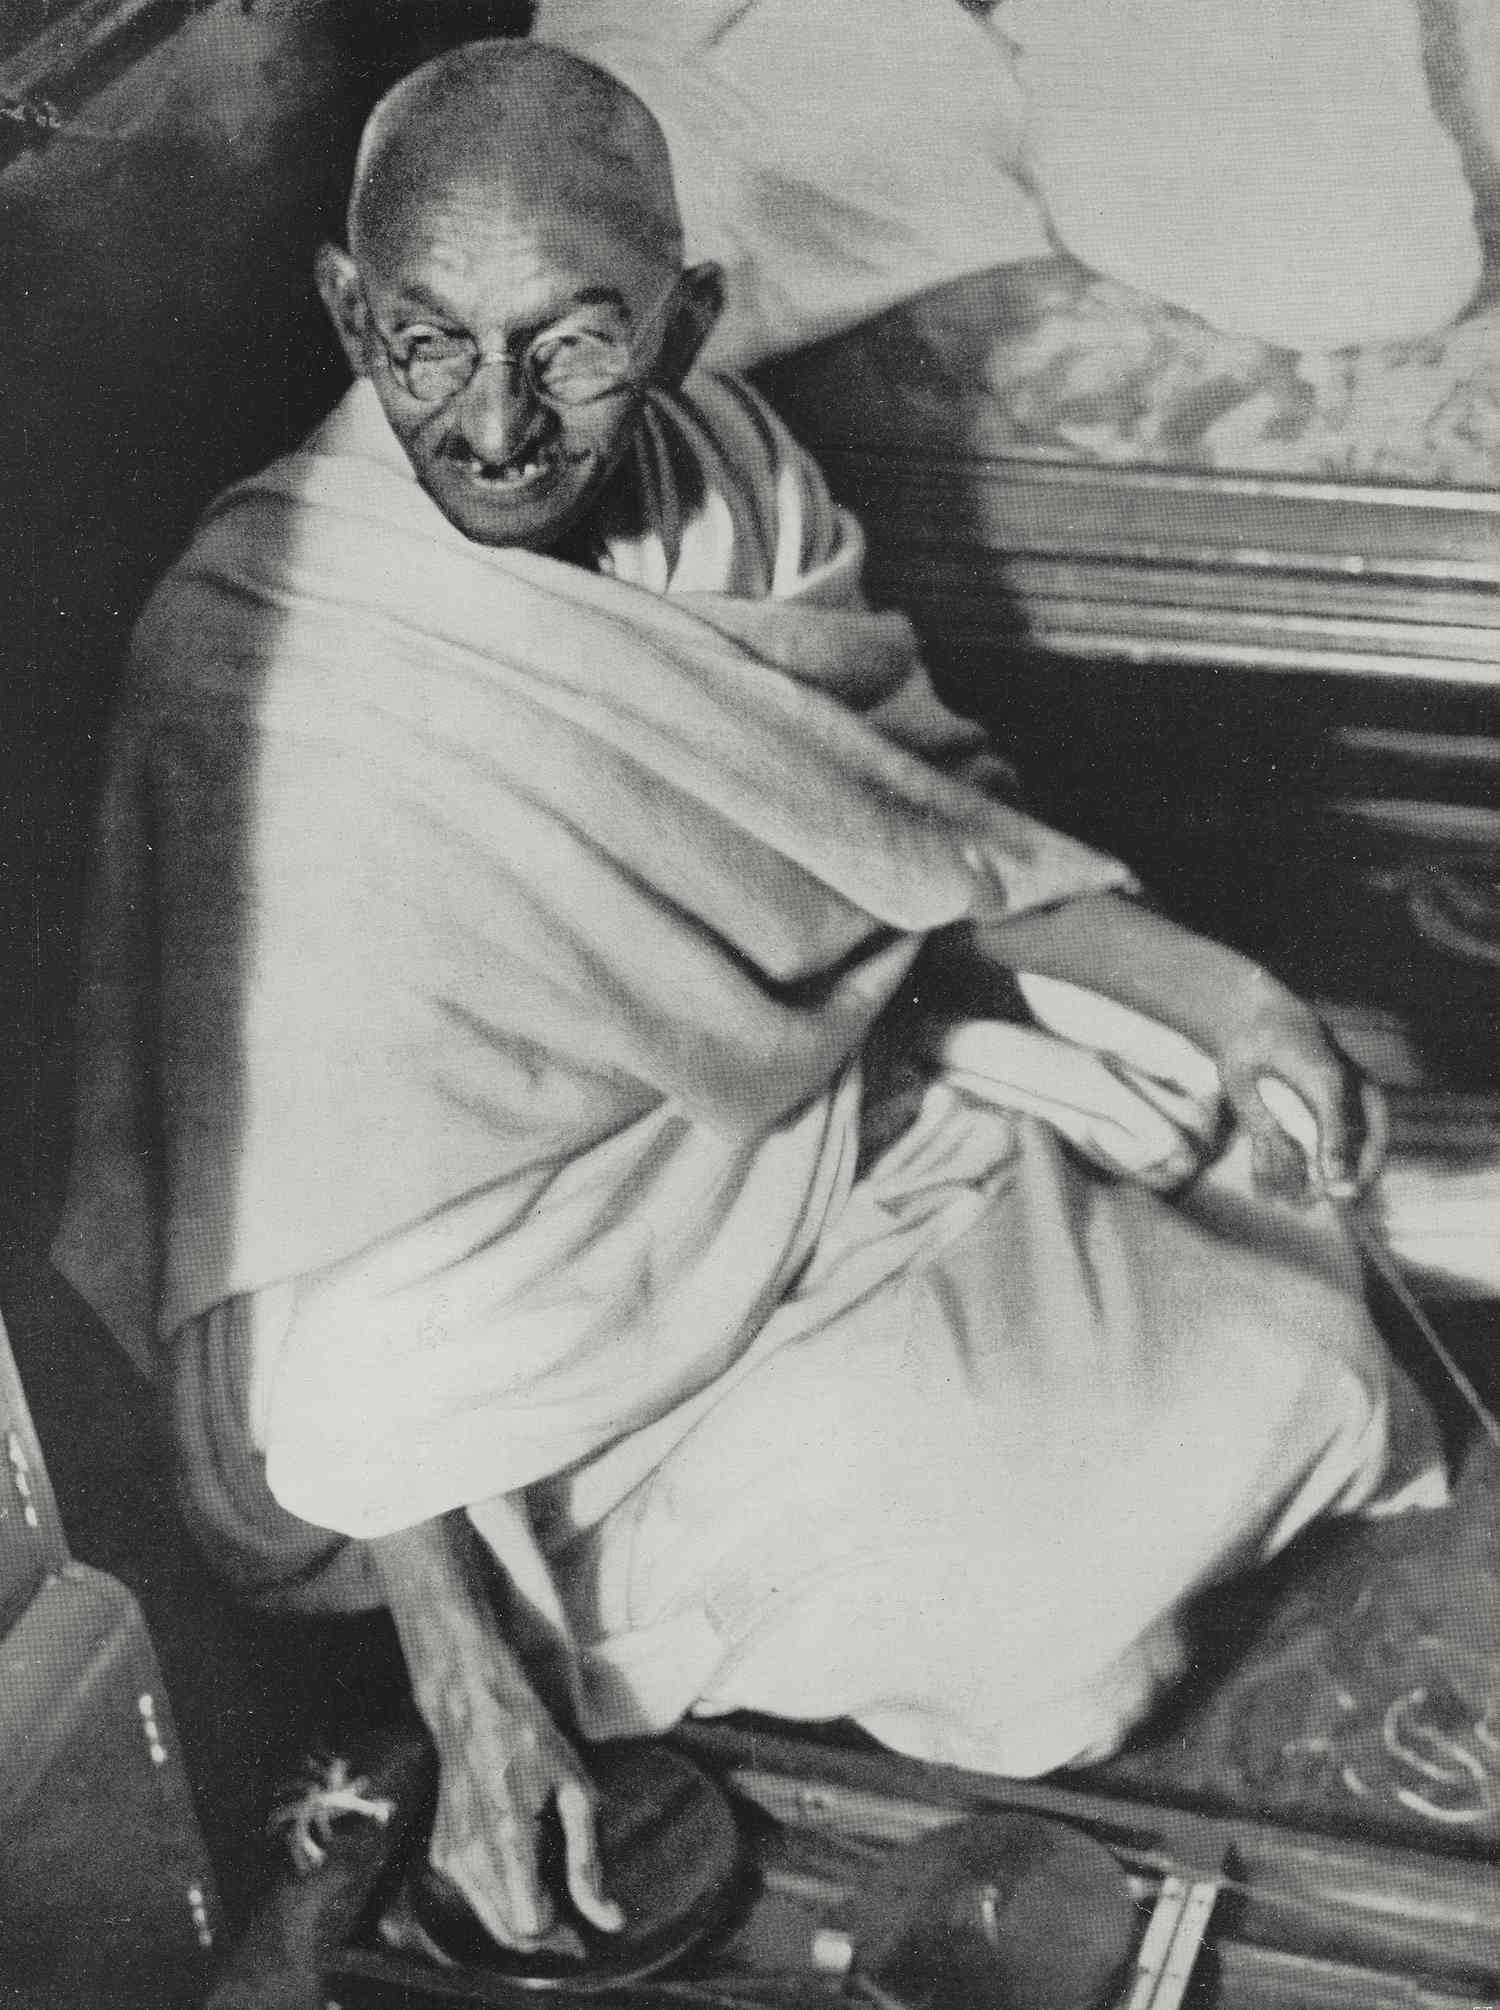 Mahatma Gandhi in robes sitting